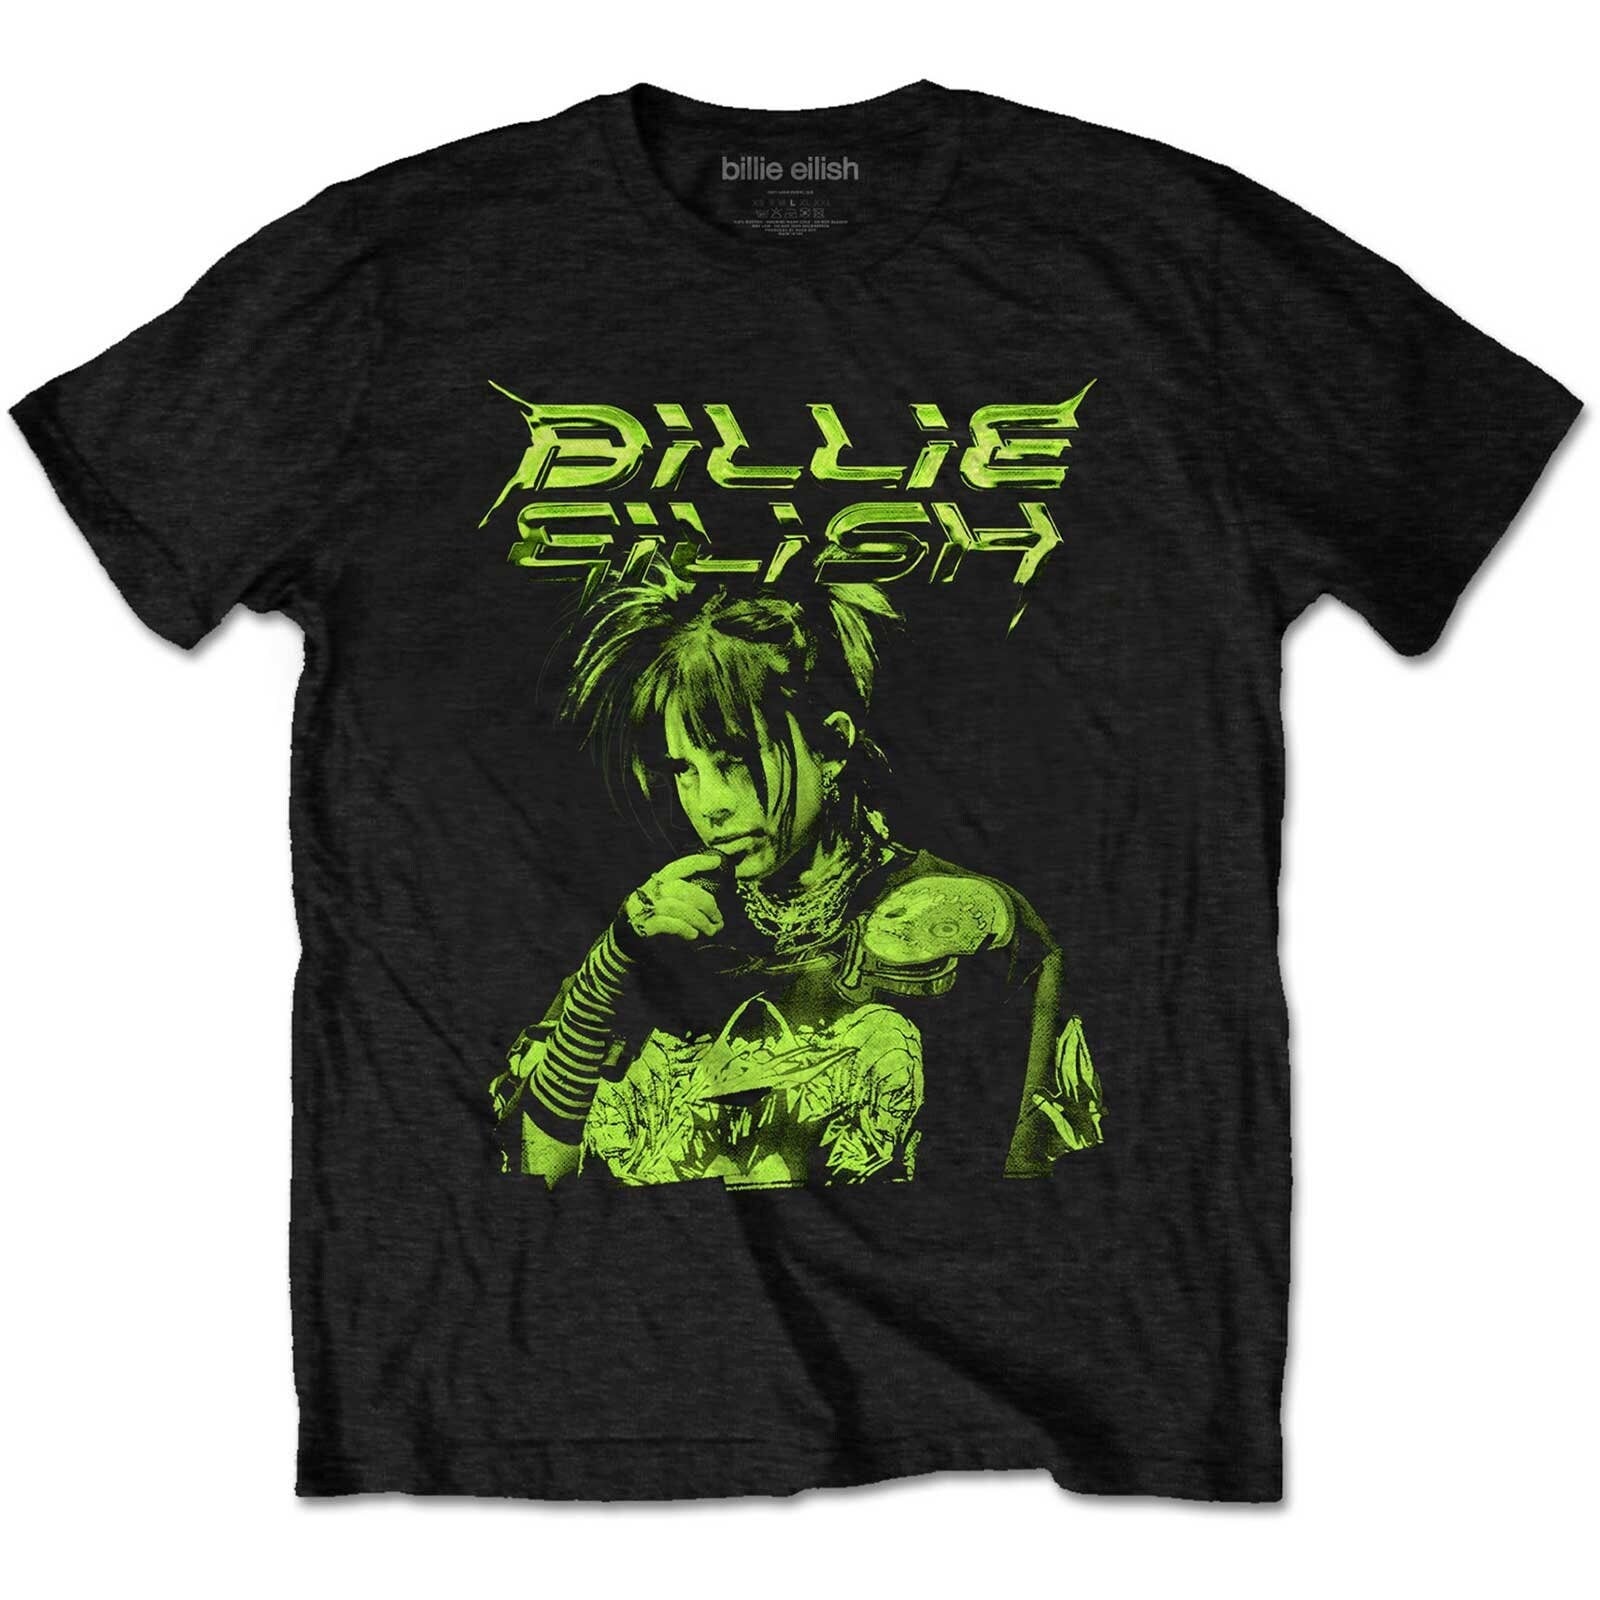 Billie Eilish Unisex T-Shirt - Illustration - Official Licensed Design - Worldwide Shipping - Jelly Frog